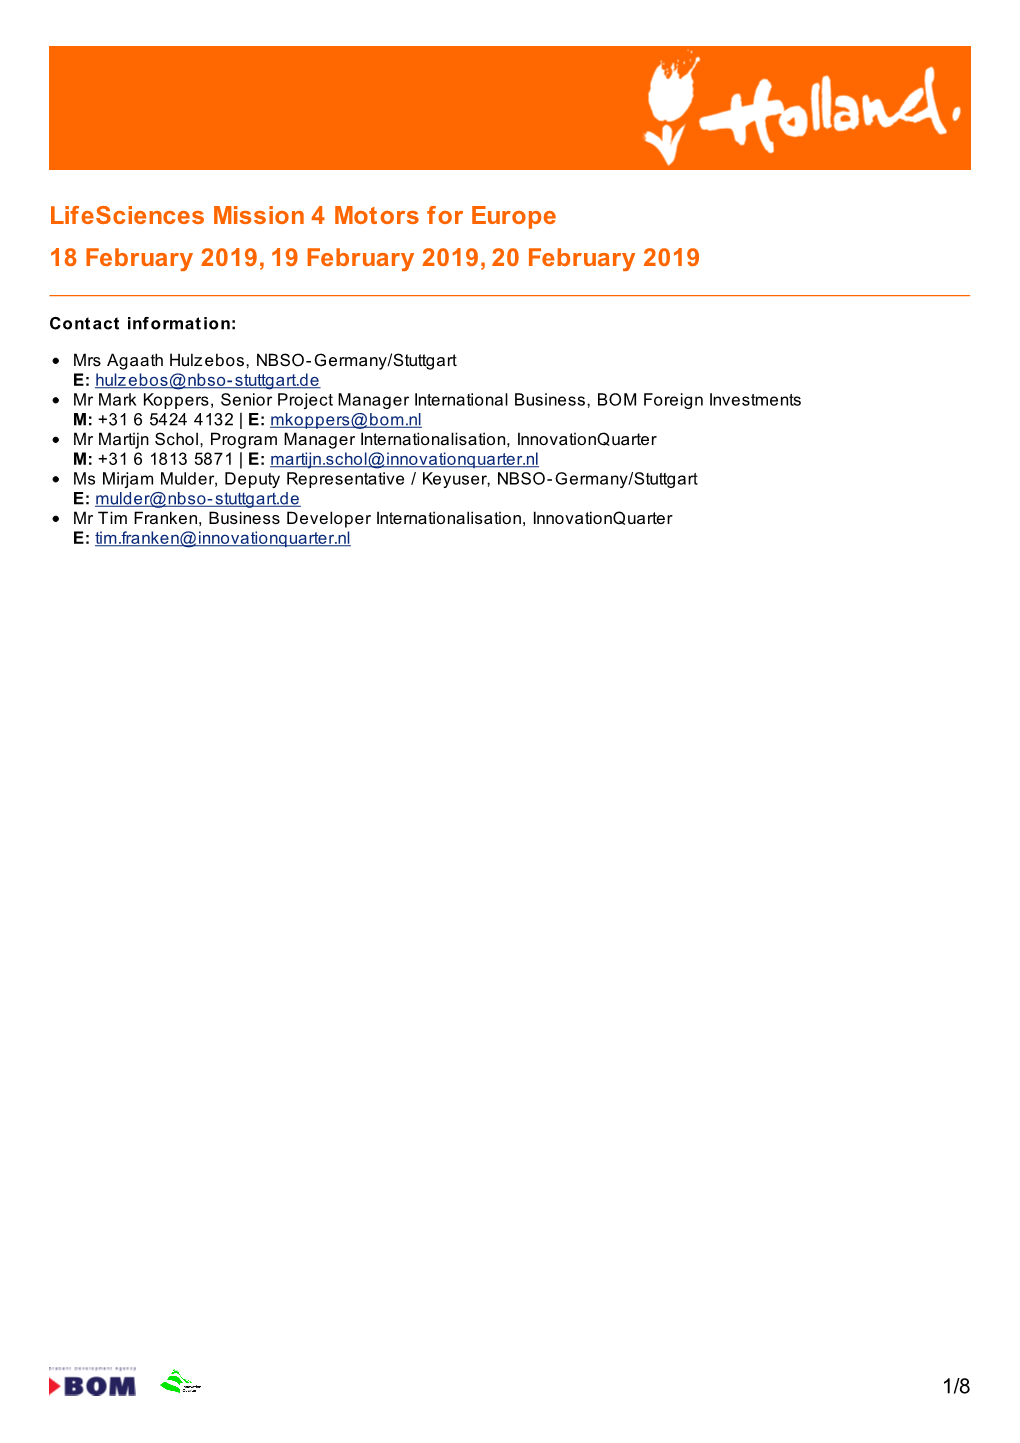 Lifesciences Mission 4 Motors for Europe 18 February 2019, 19 February 2019, 20 February 2019